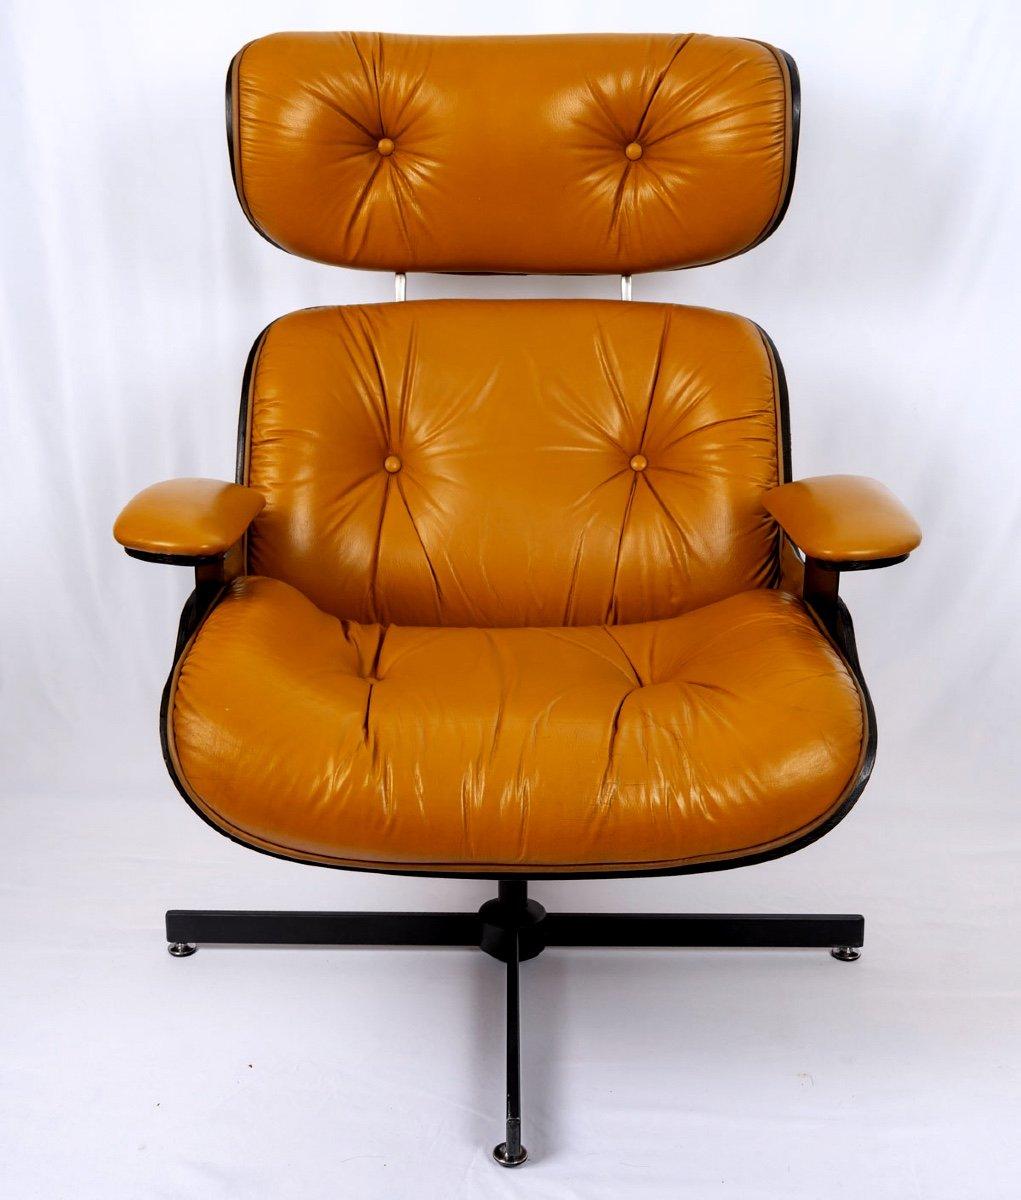 Fauteuil de salon & Son Ottoman - Cuir et aluminium - Designer Charles & Ray Eames - 1